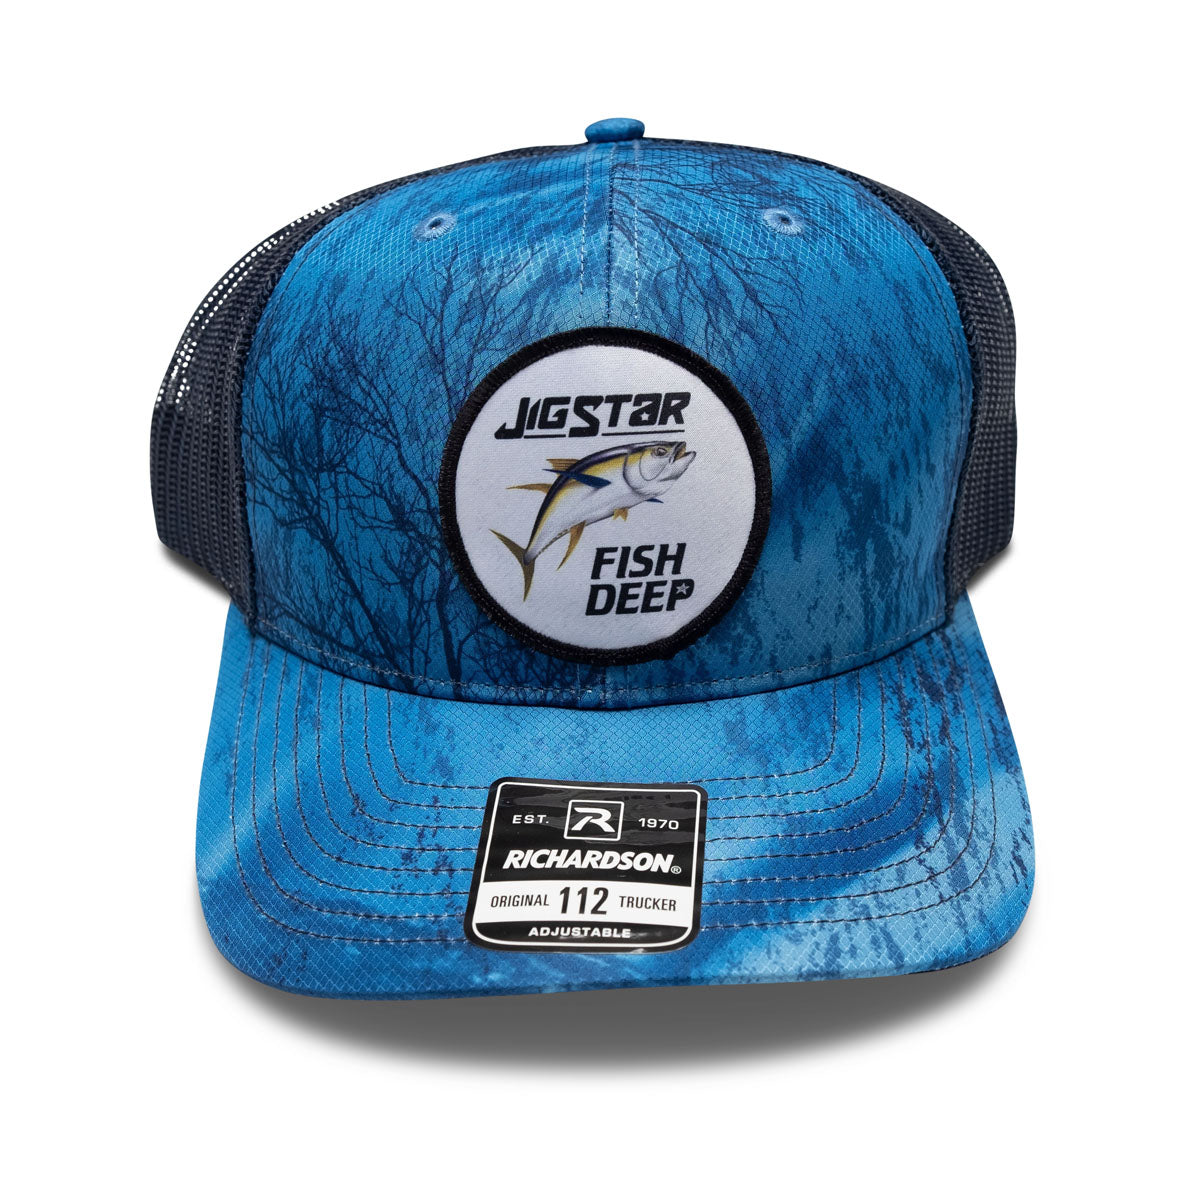 Jig Star “Fish Deep” Realtree Adjustable Trucker hat